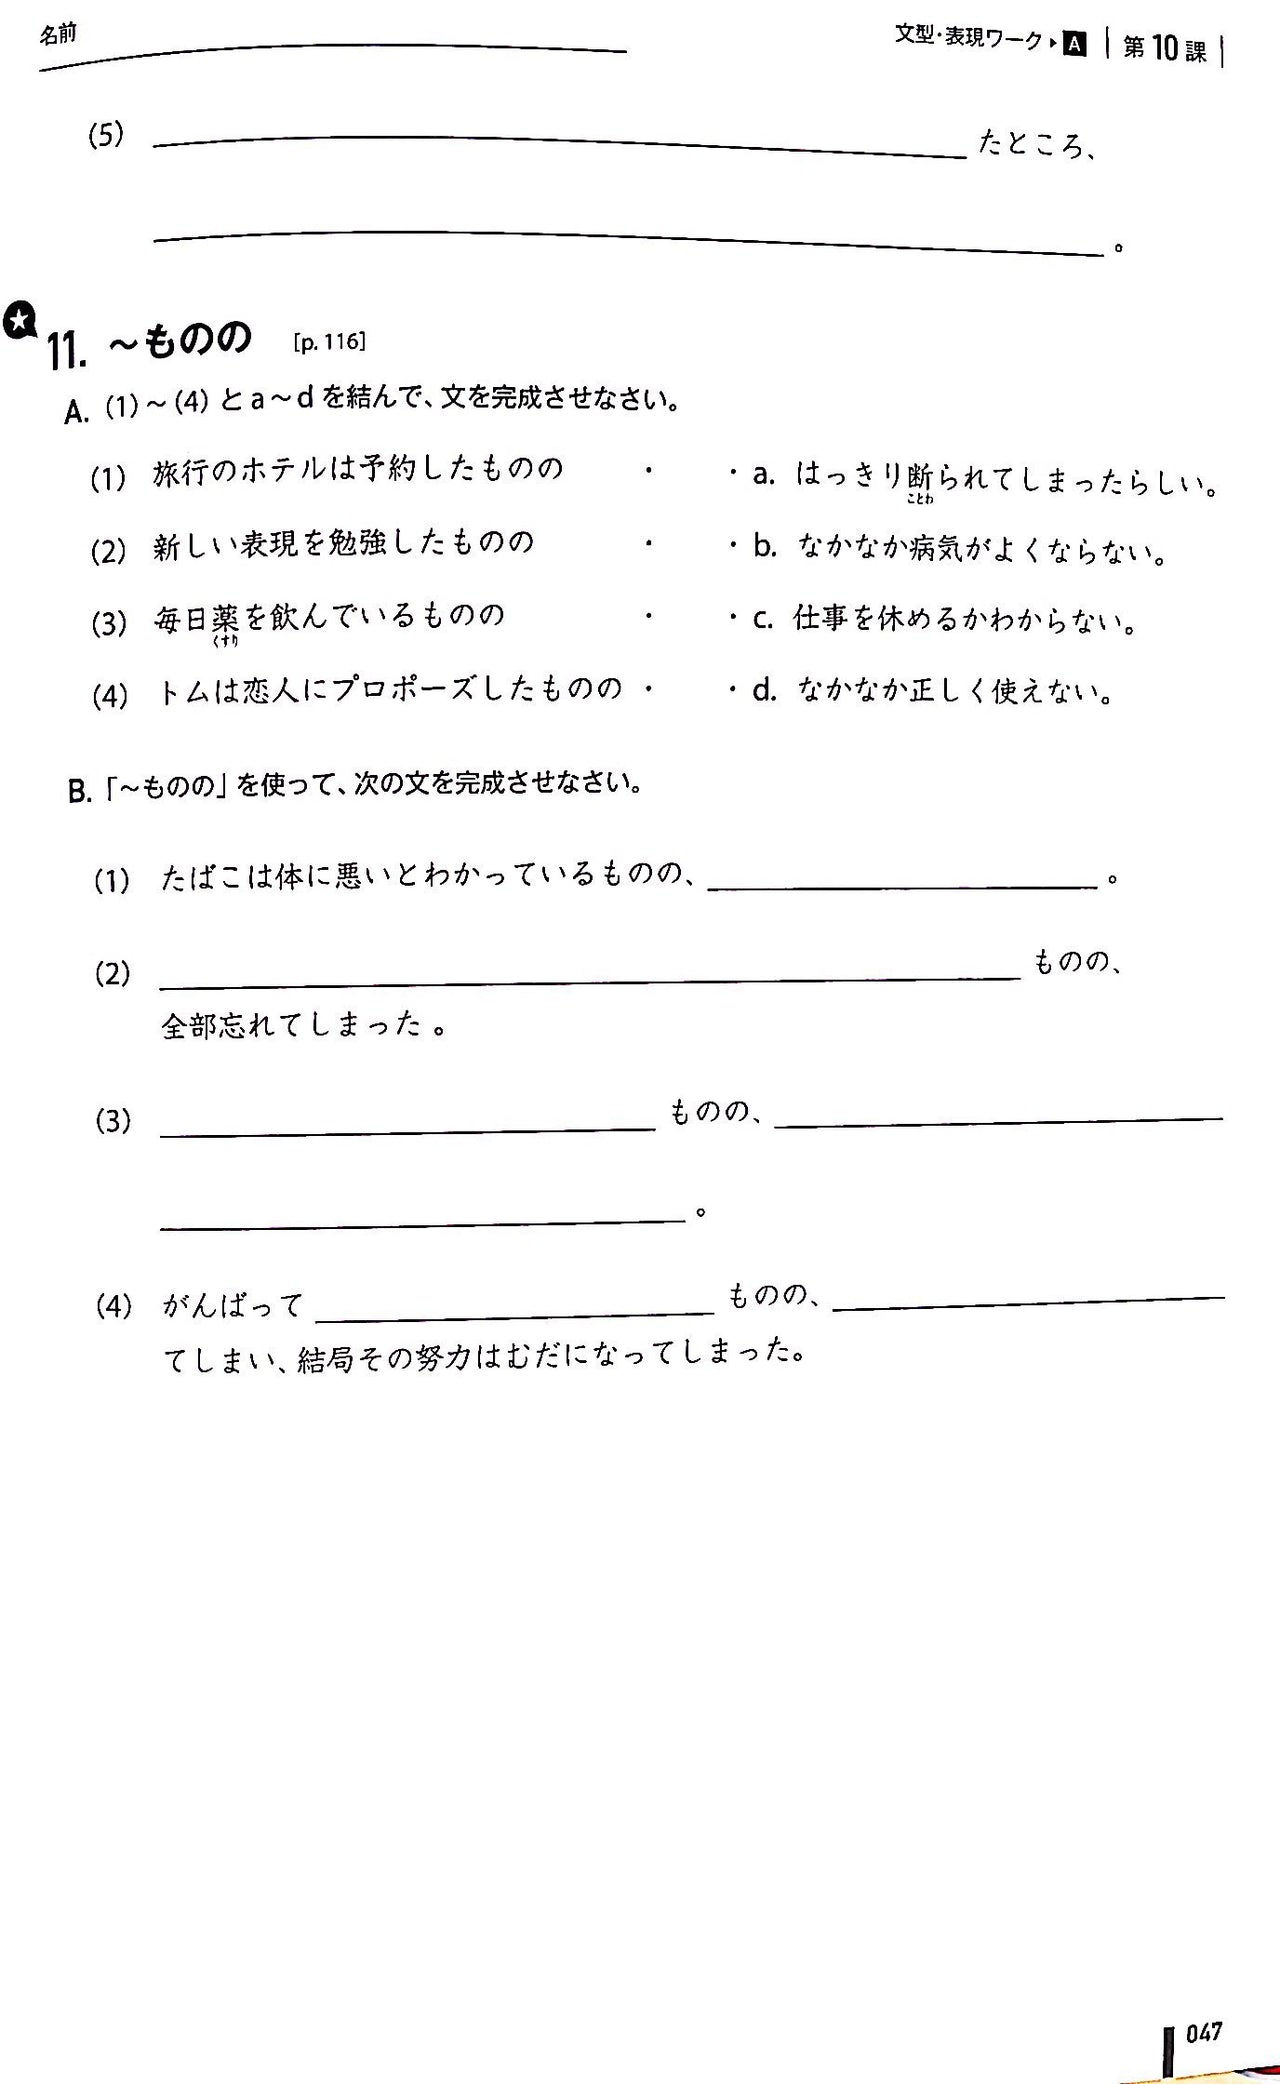 Quartet Vol 2 Workbook - Intermediate Japanese Across the Four Language Skills